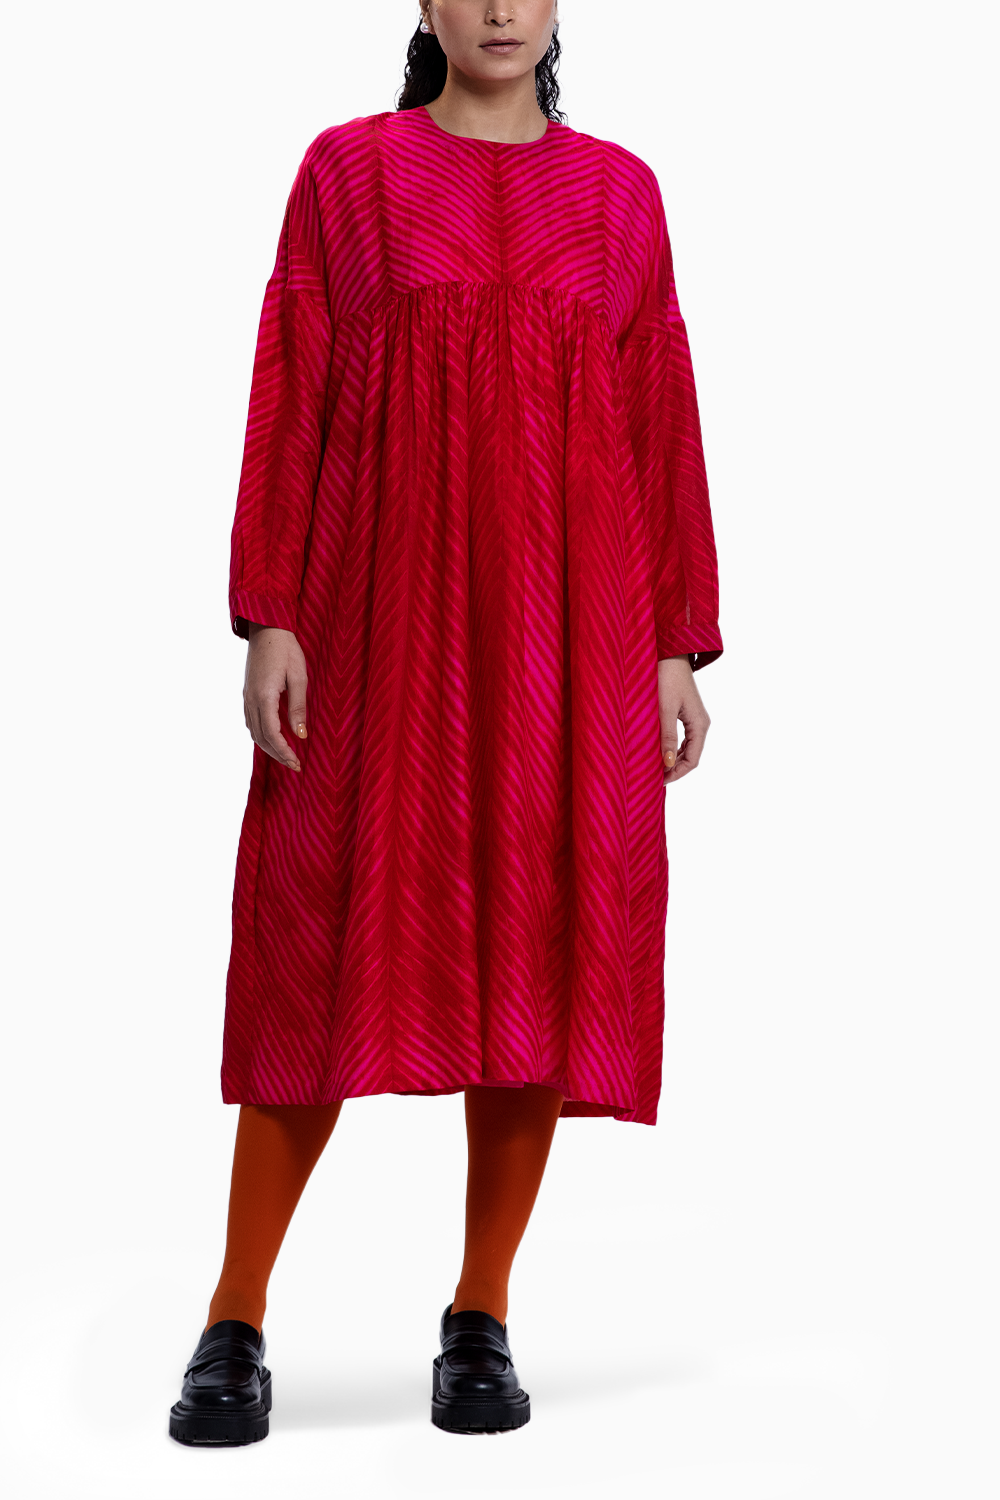 Rani Red Sea Dress